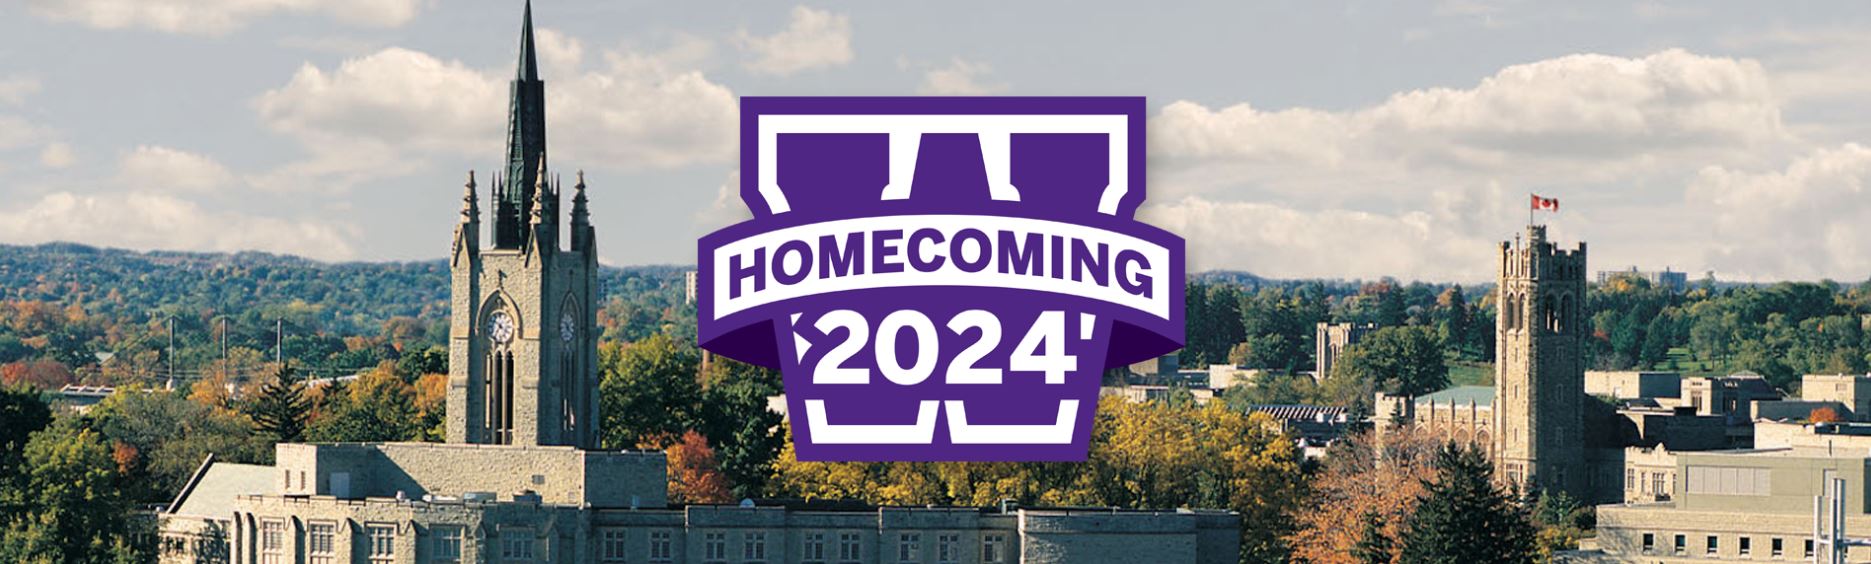 Homecoming-Banner-Graphic-2024-Homecoming.JPG